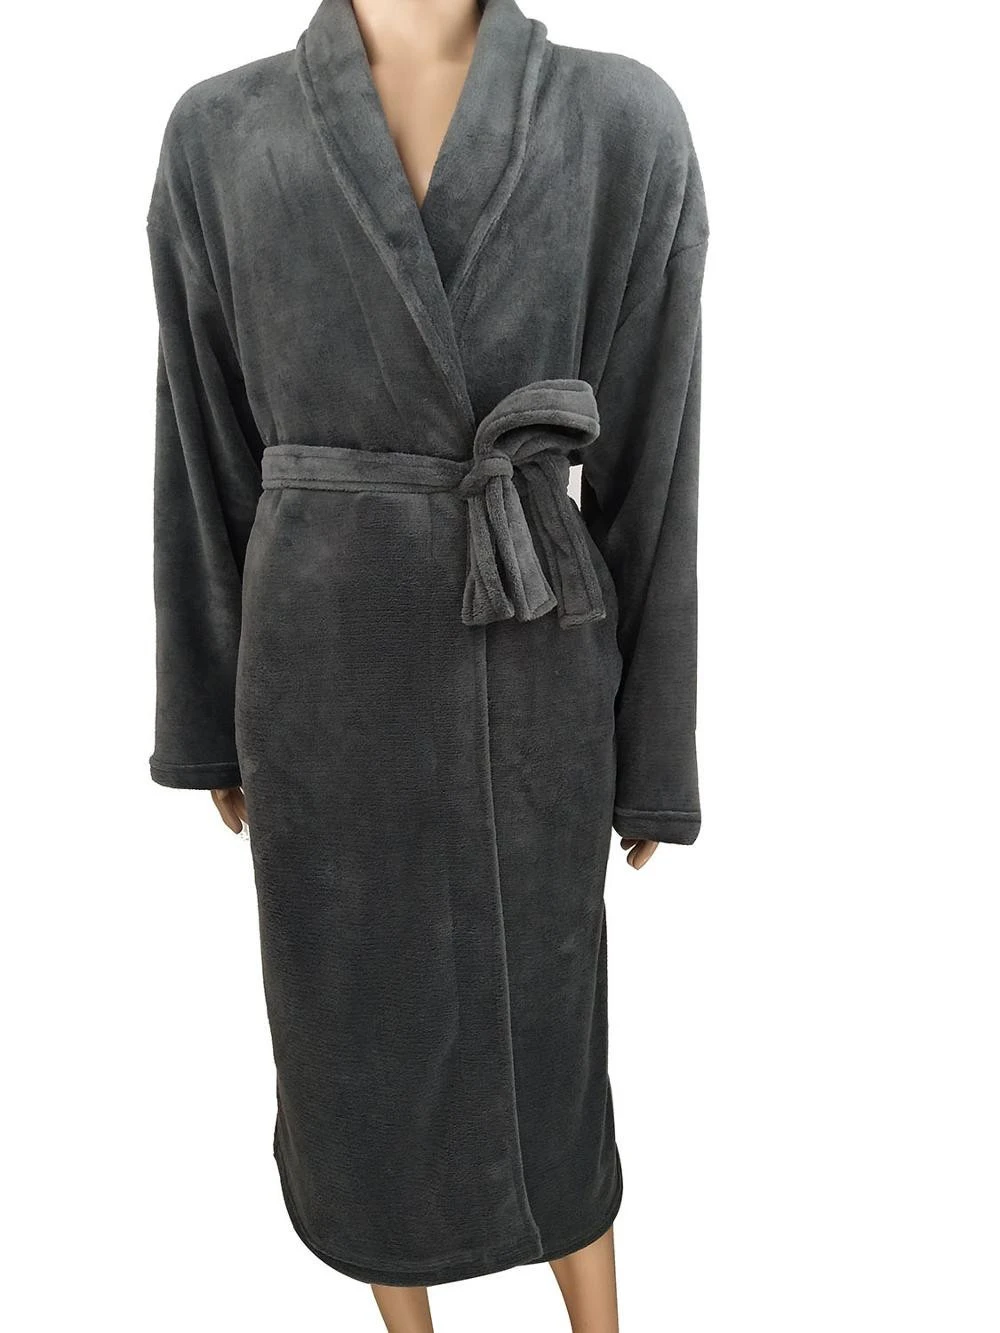 100% Polyester Super soft Sexy Women fleece robes wholesale hotel bathrobe